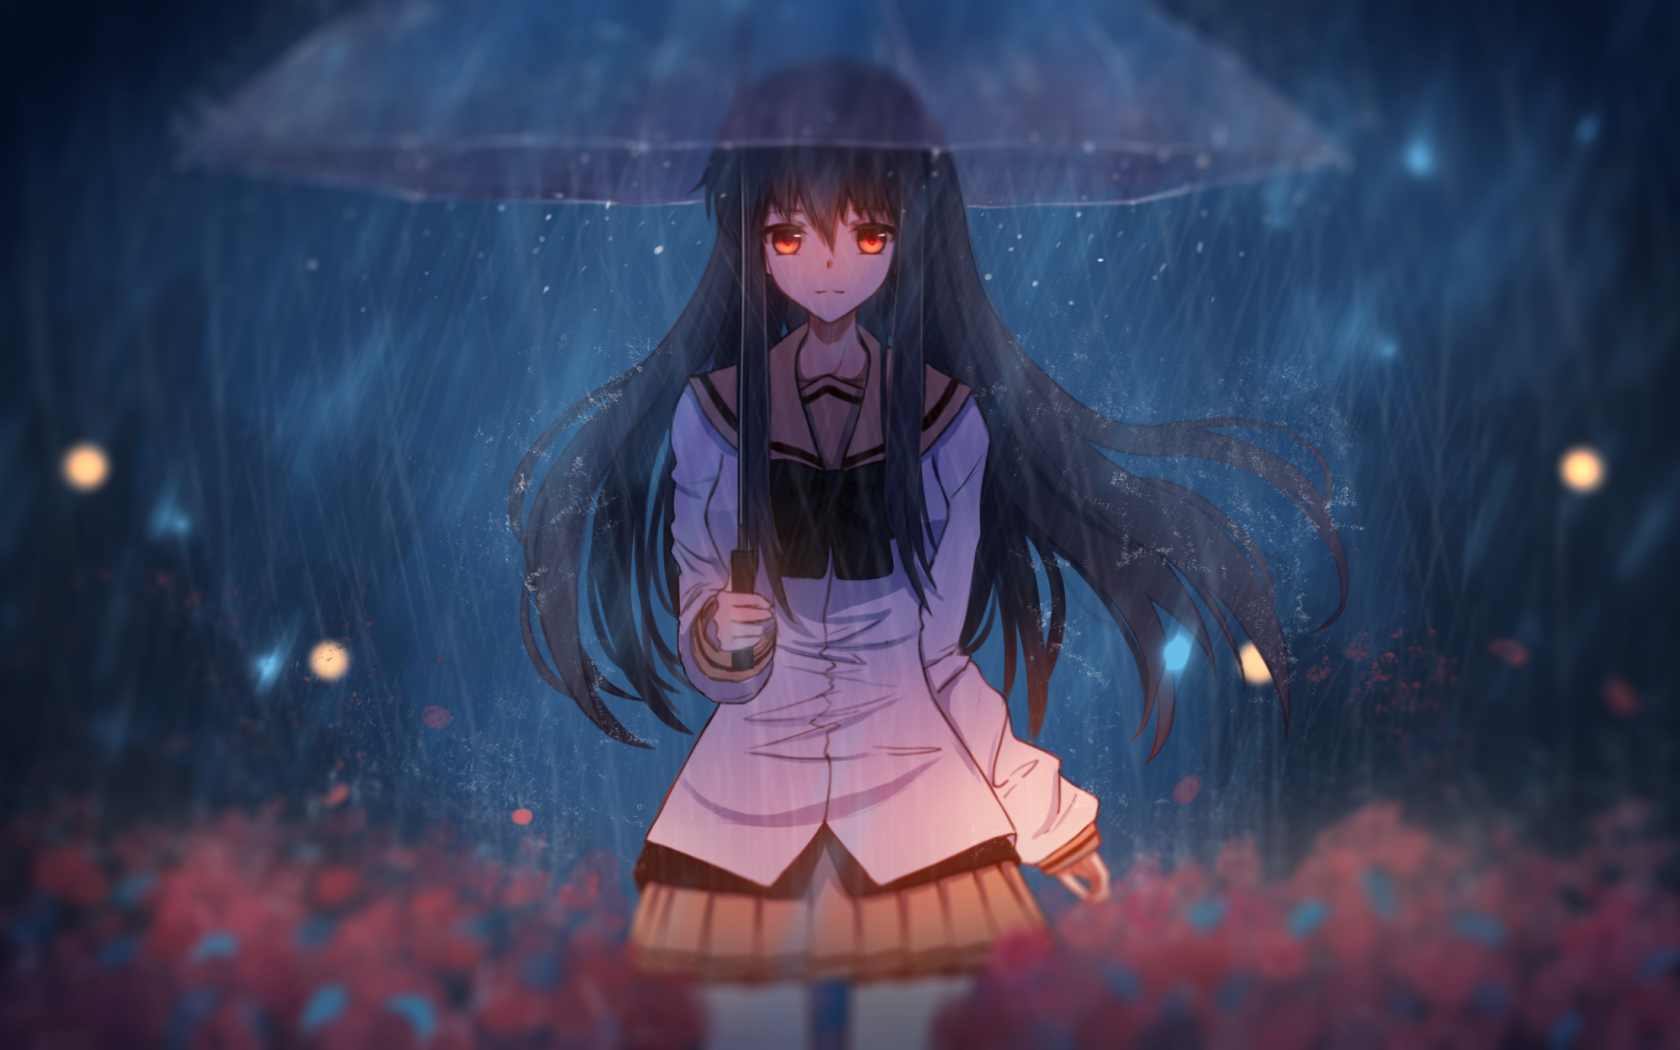 Anime girl under an umbrella in the rain